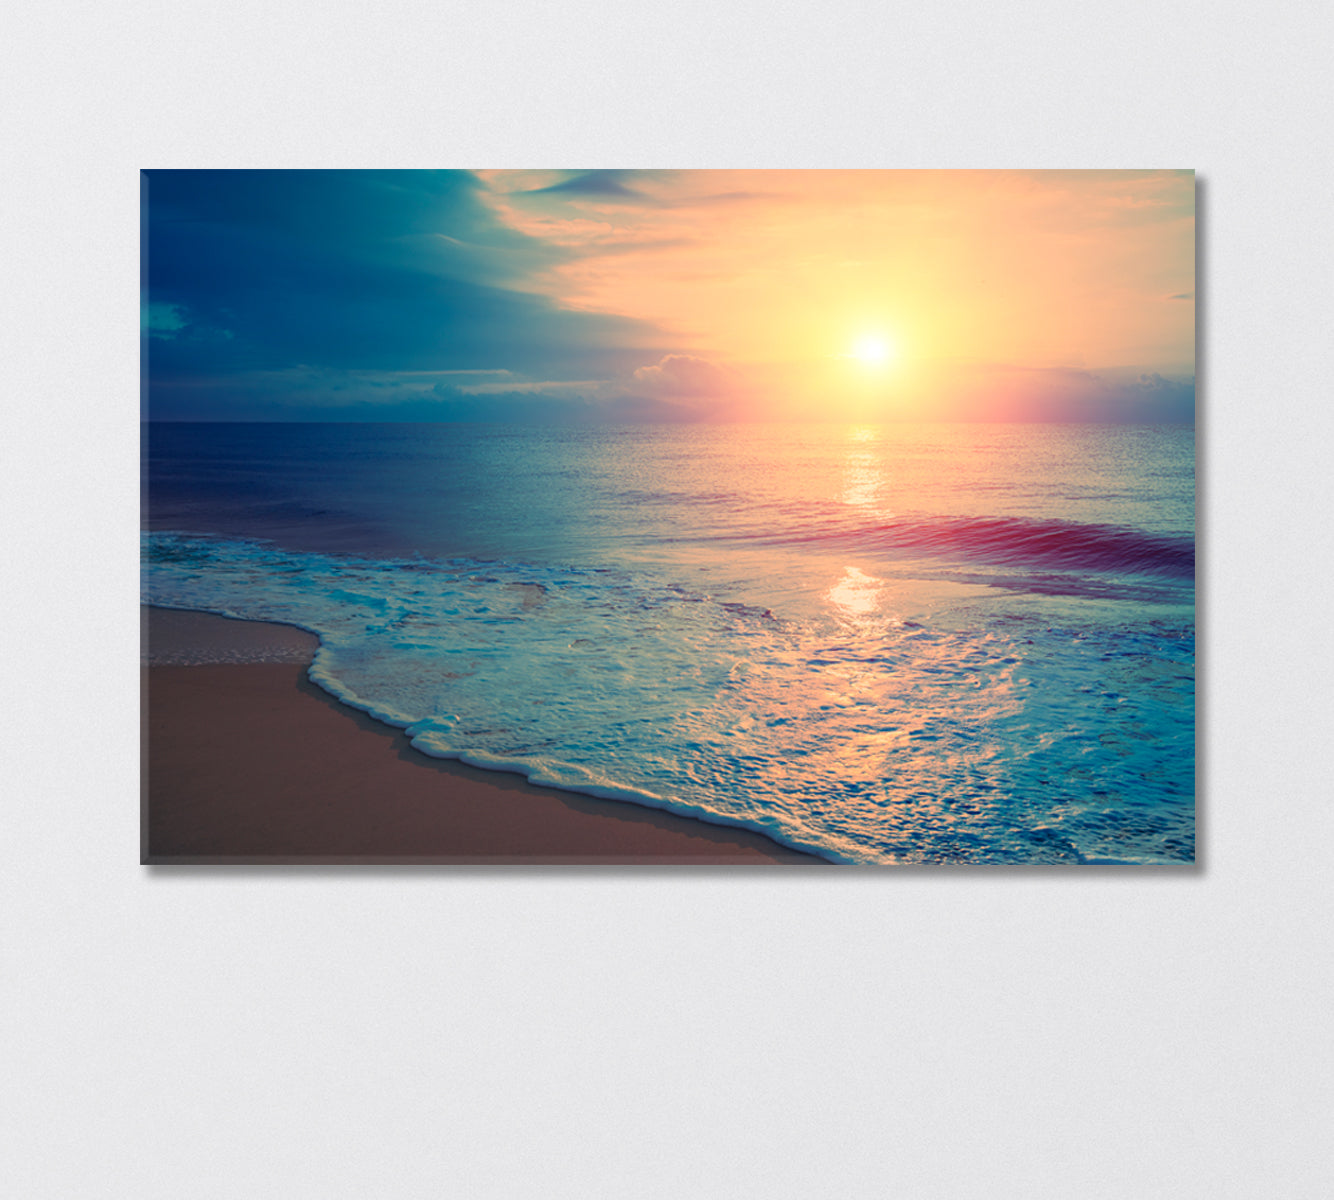 Seascape Sunrise over the Sea Canvas Print-Canvas Print-CetArt-1 Panel-24x16 inches-CetArt